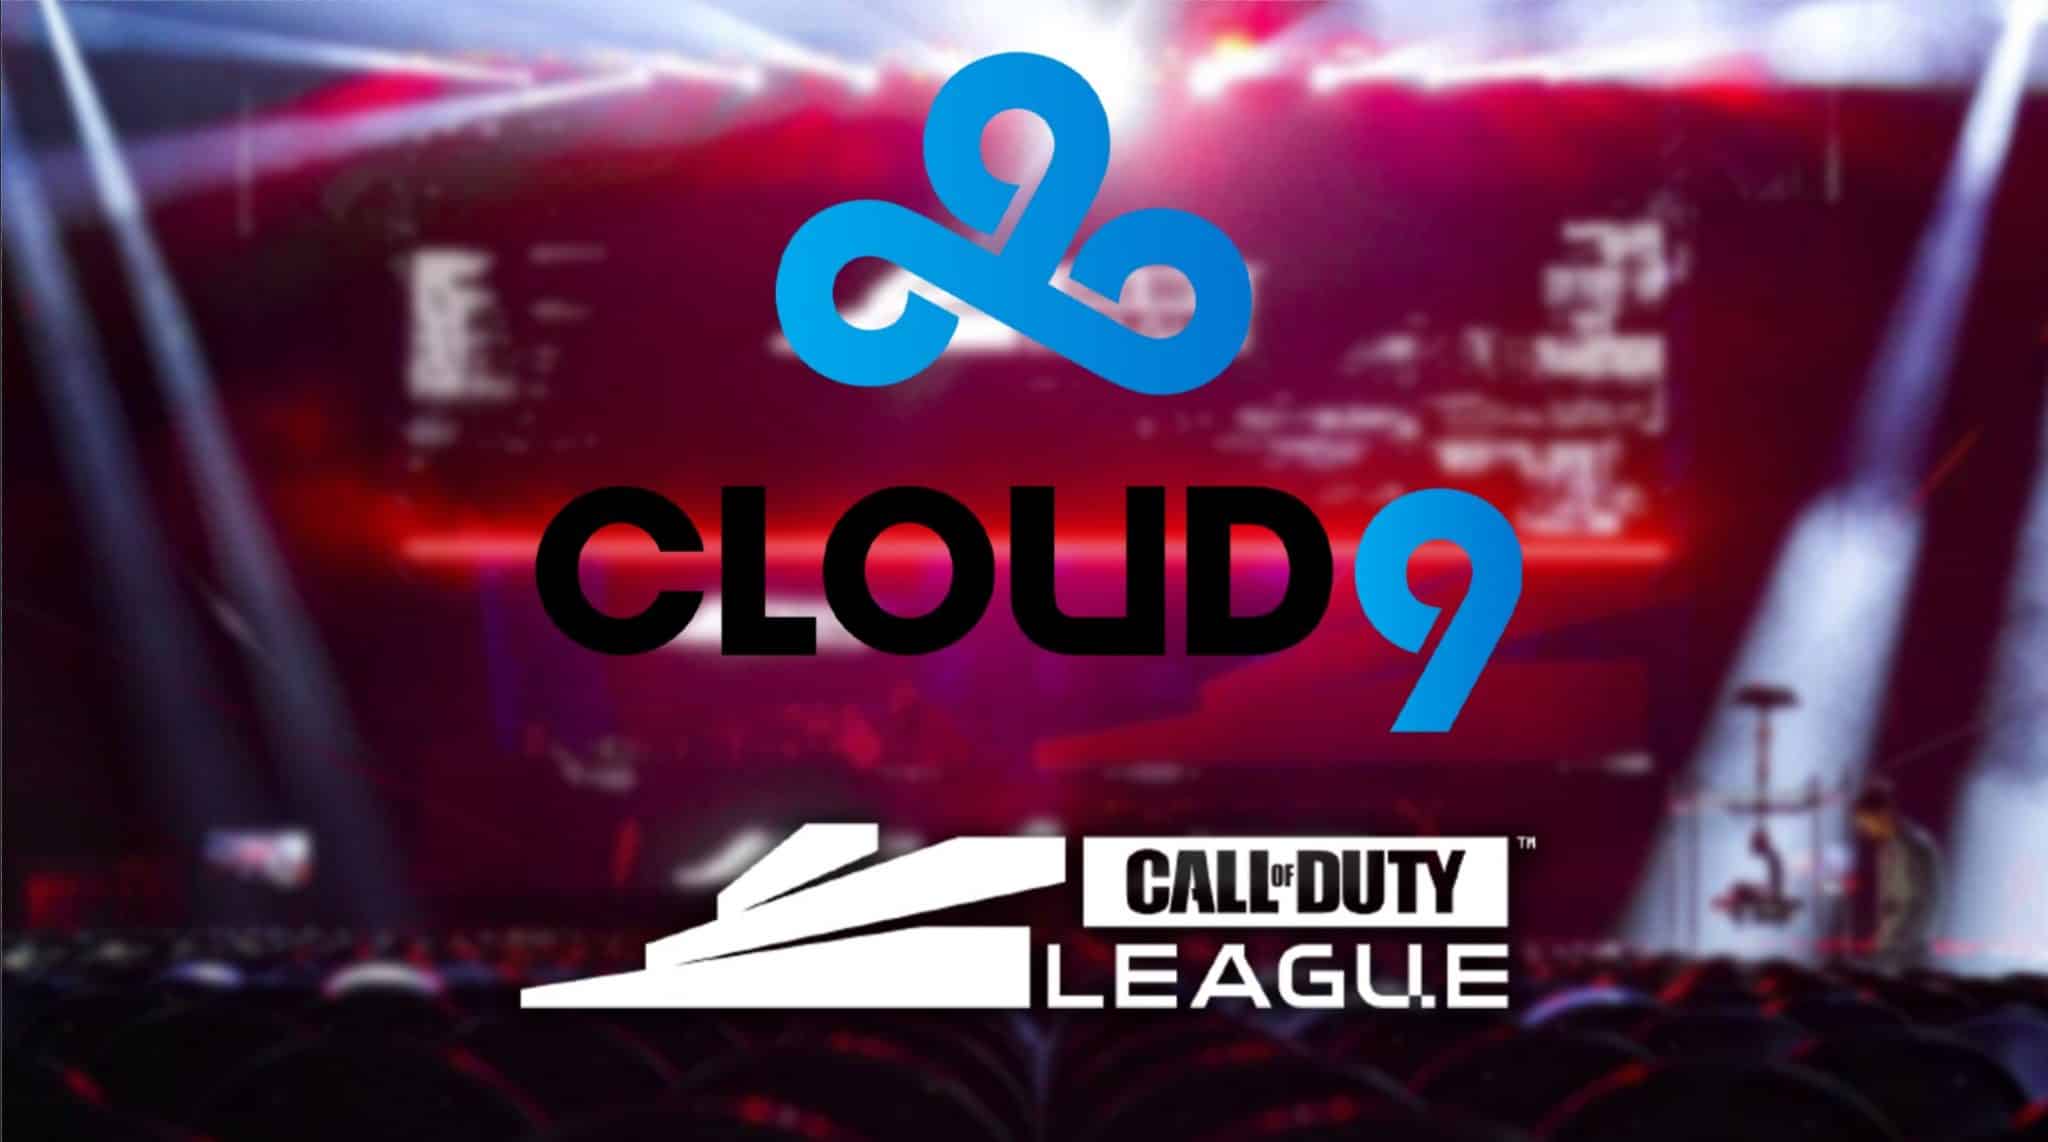 Cloud9 Call of Duty League